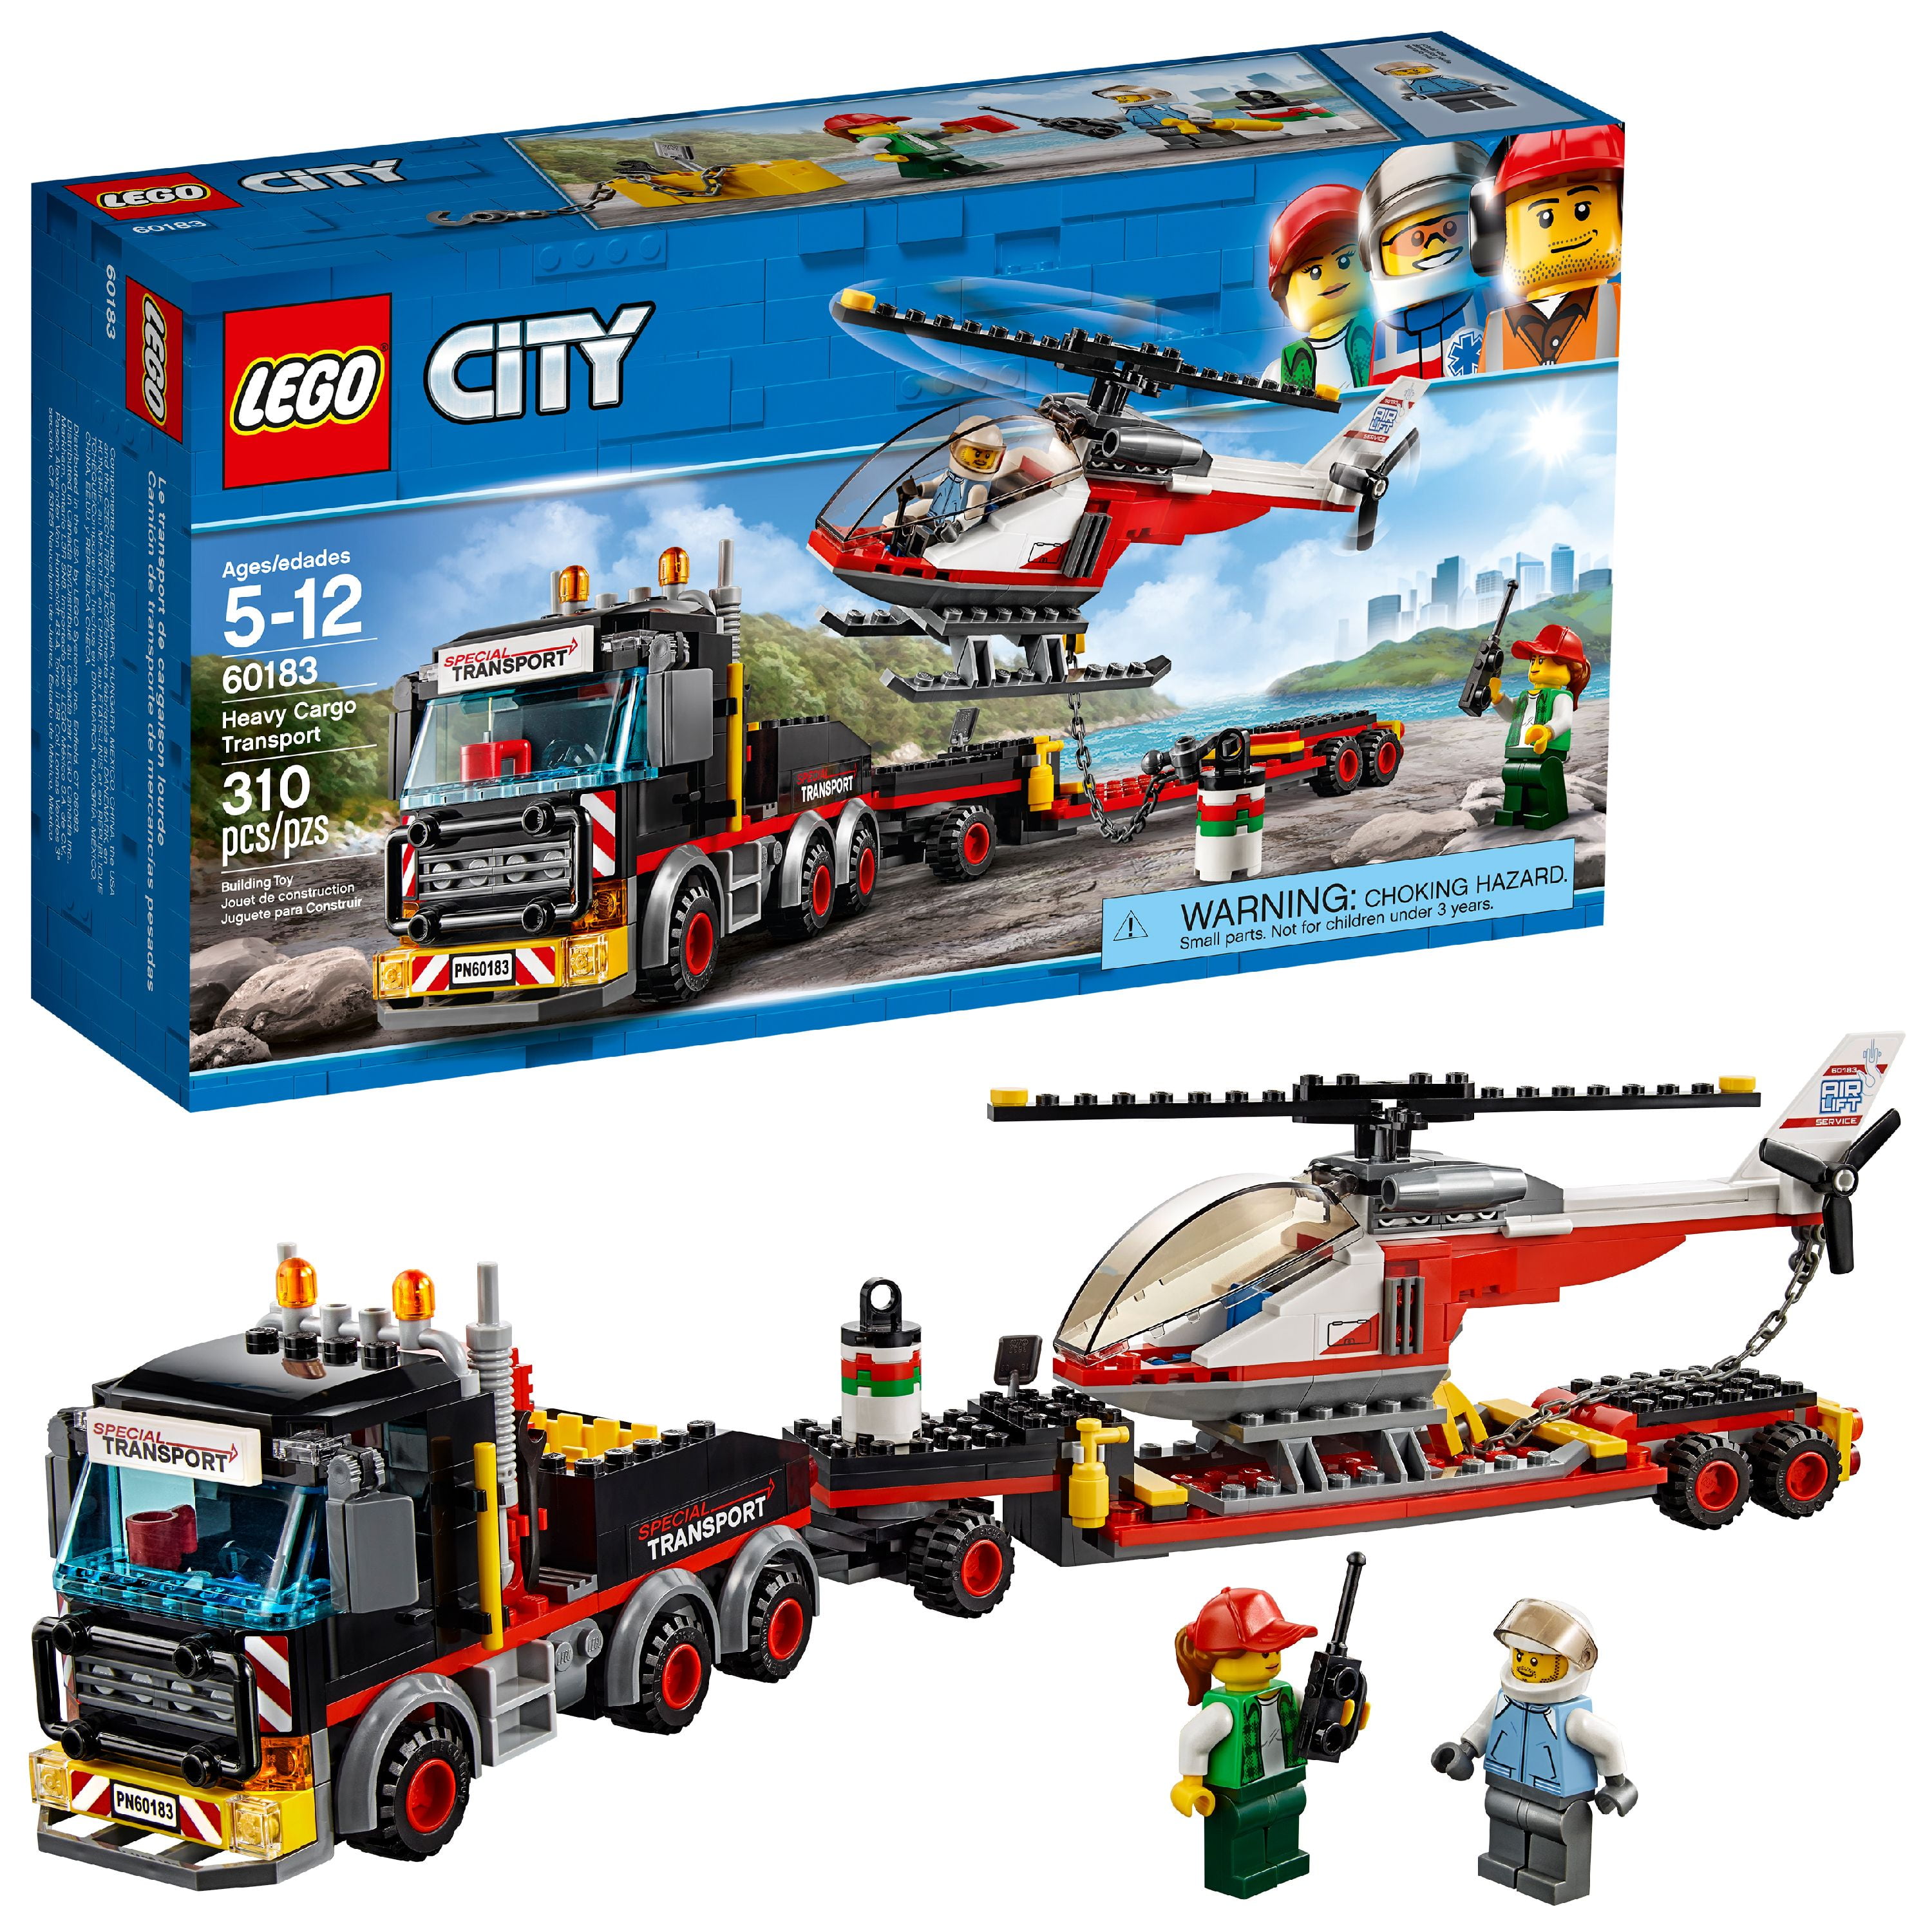 City Heavy Cargo Transport 60183 Toy Truck Building Kit